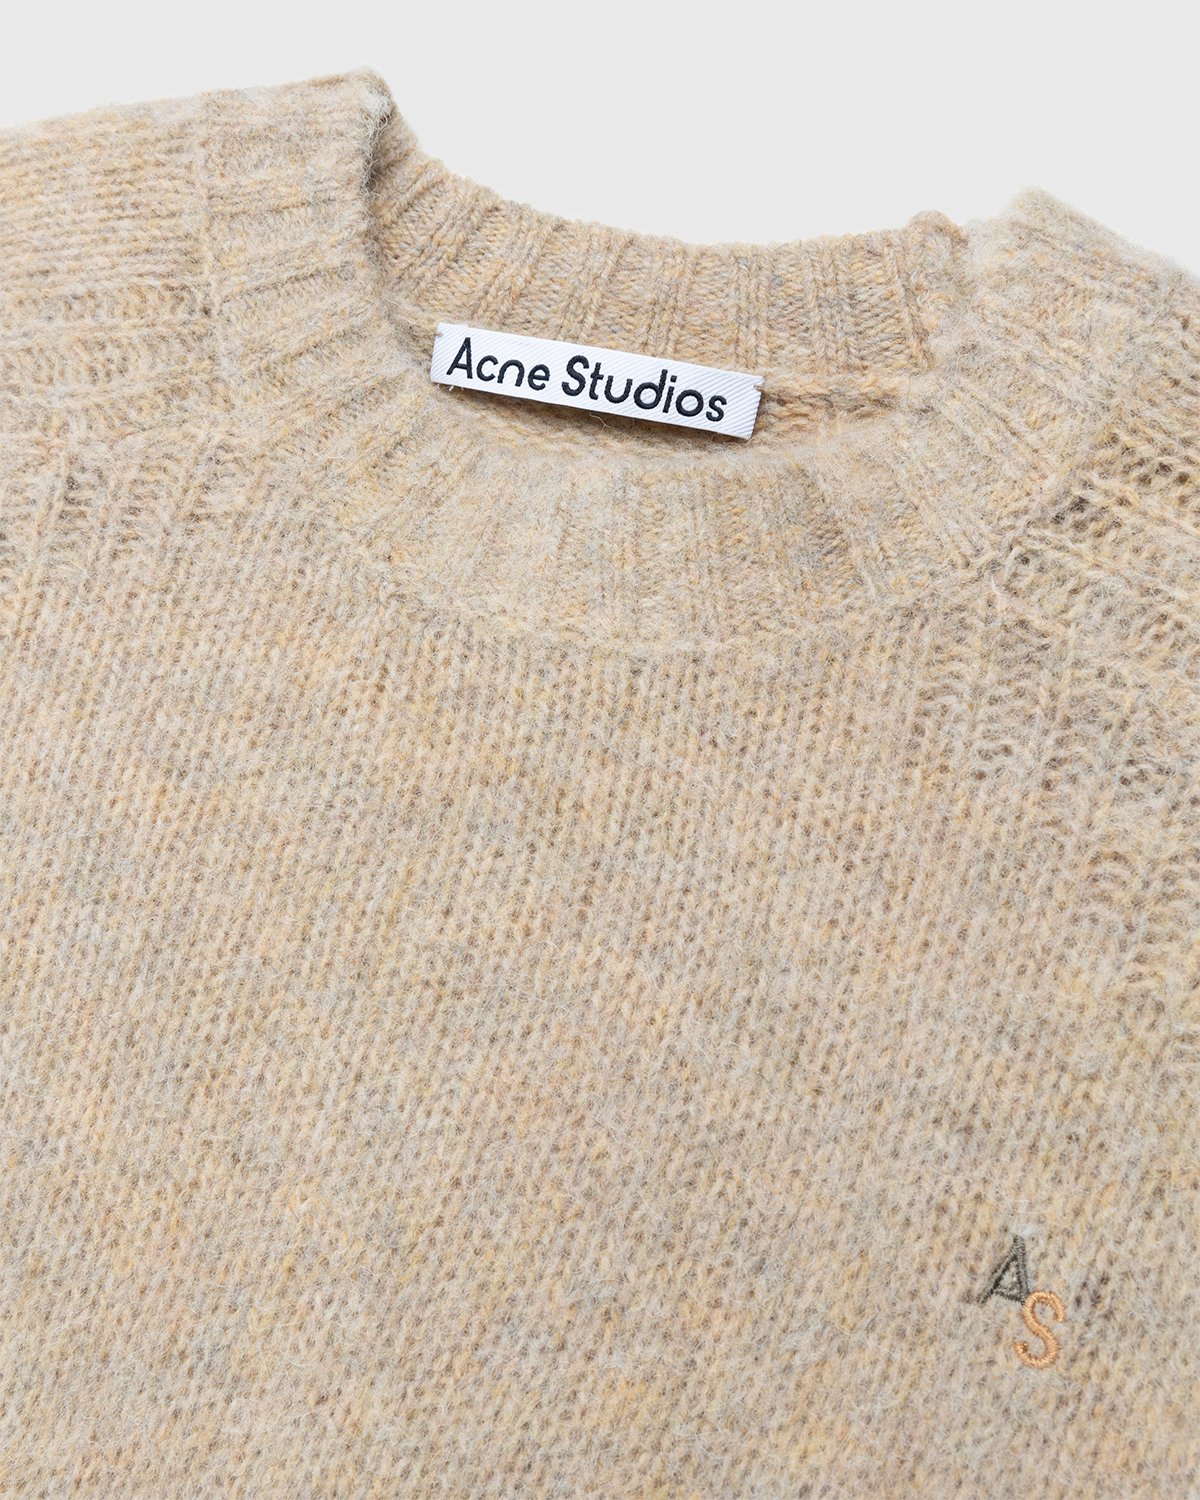 Acne Studios - Brushed Wool Crewneck Sweater Toffee Brown - Clothing - Brown - Image 4